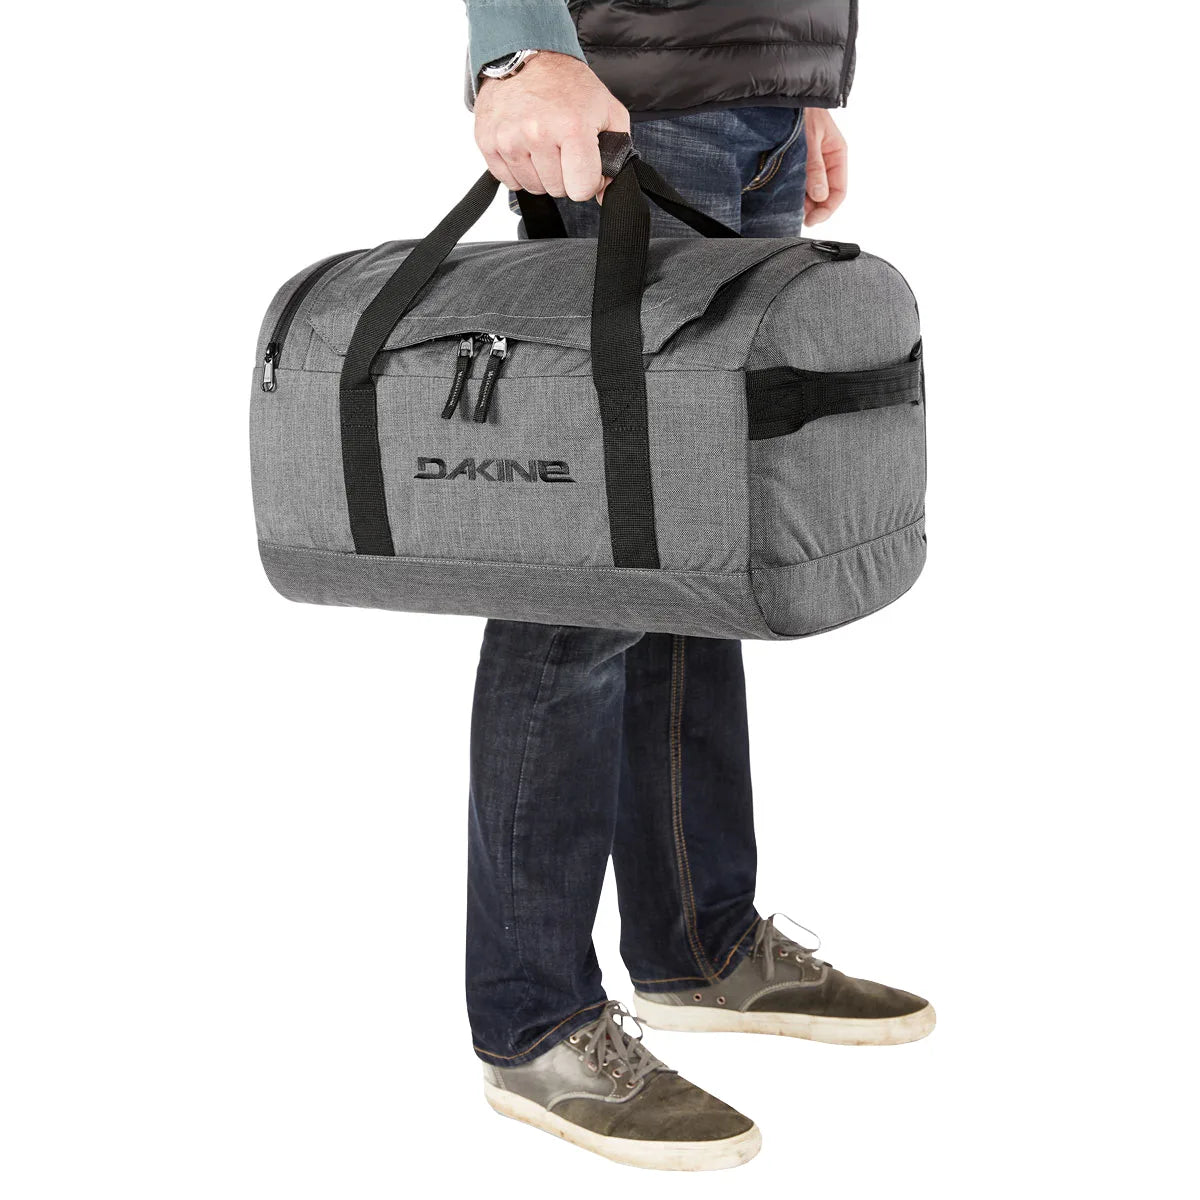 Dakine Packs & Bags EQ Duffle 35L Sports Bag 48 cm - Cascade Camo